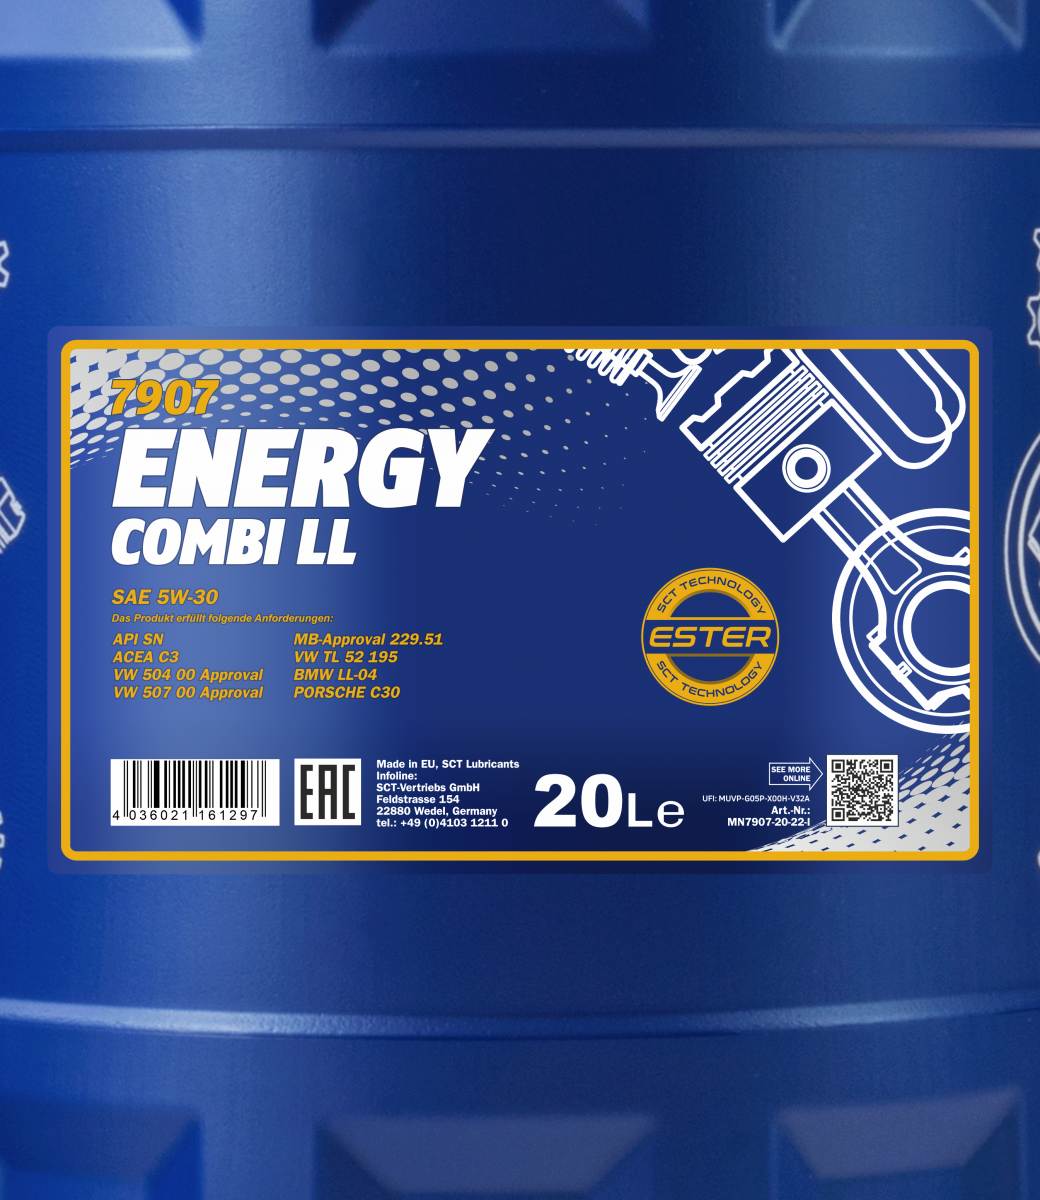 Engine Oil MANNOL 5W-30 Energy Combi LL 2 X 4 liters buy online b, 50,95 €